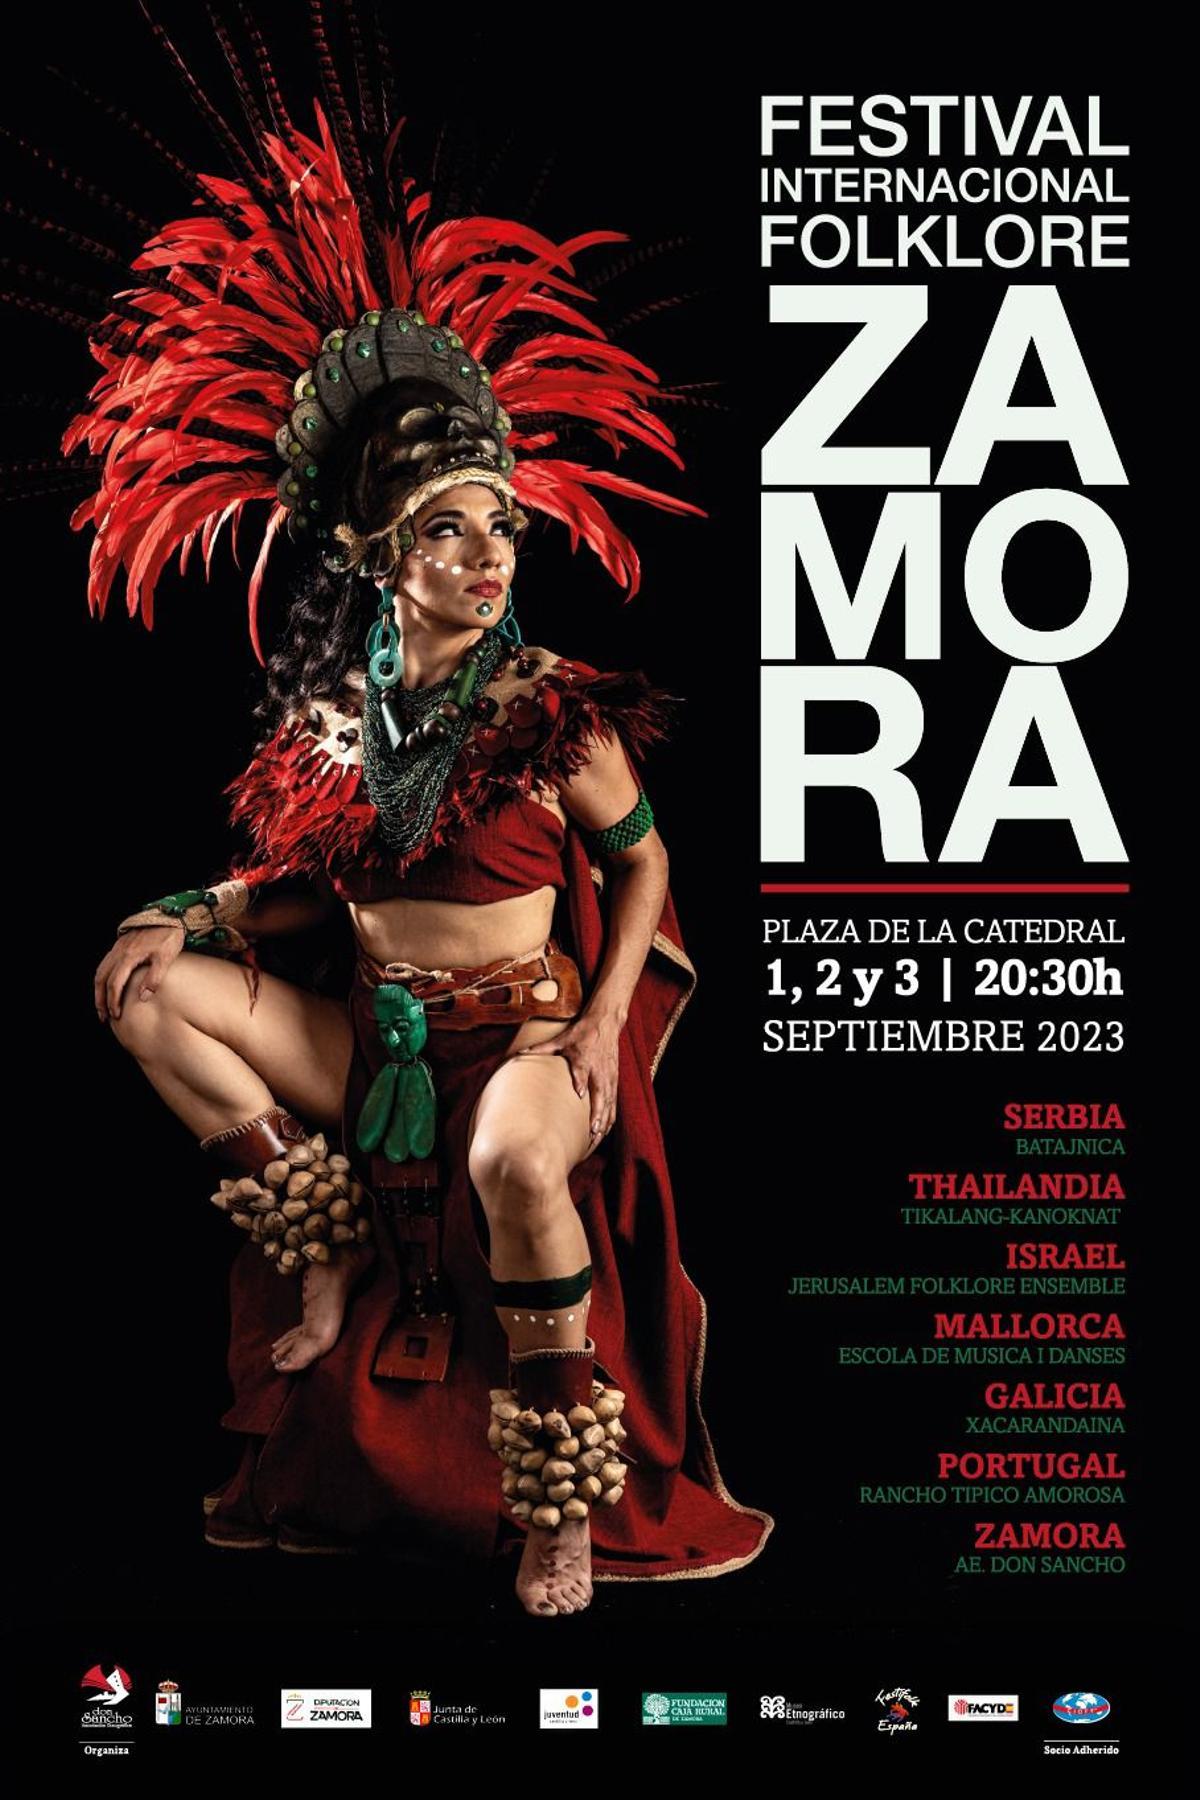 n del Festival Internacional de FolkLore de Zamora